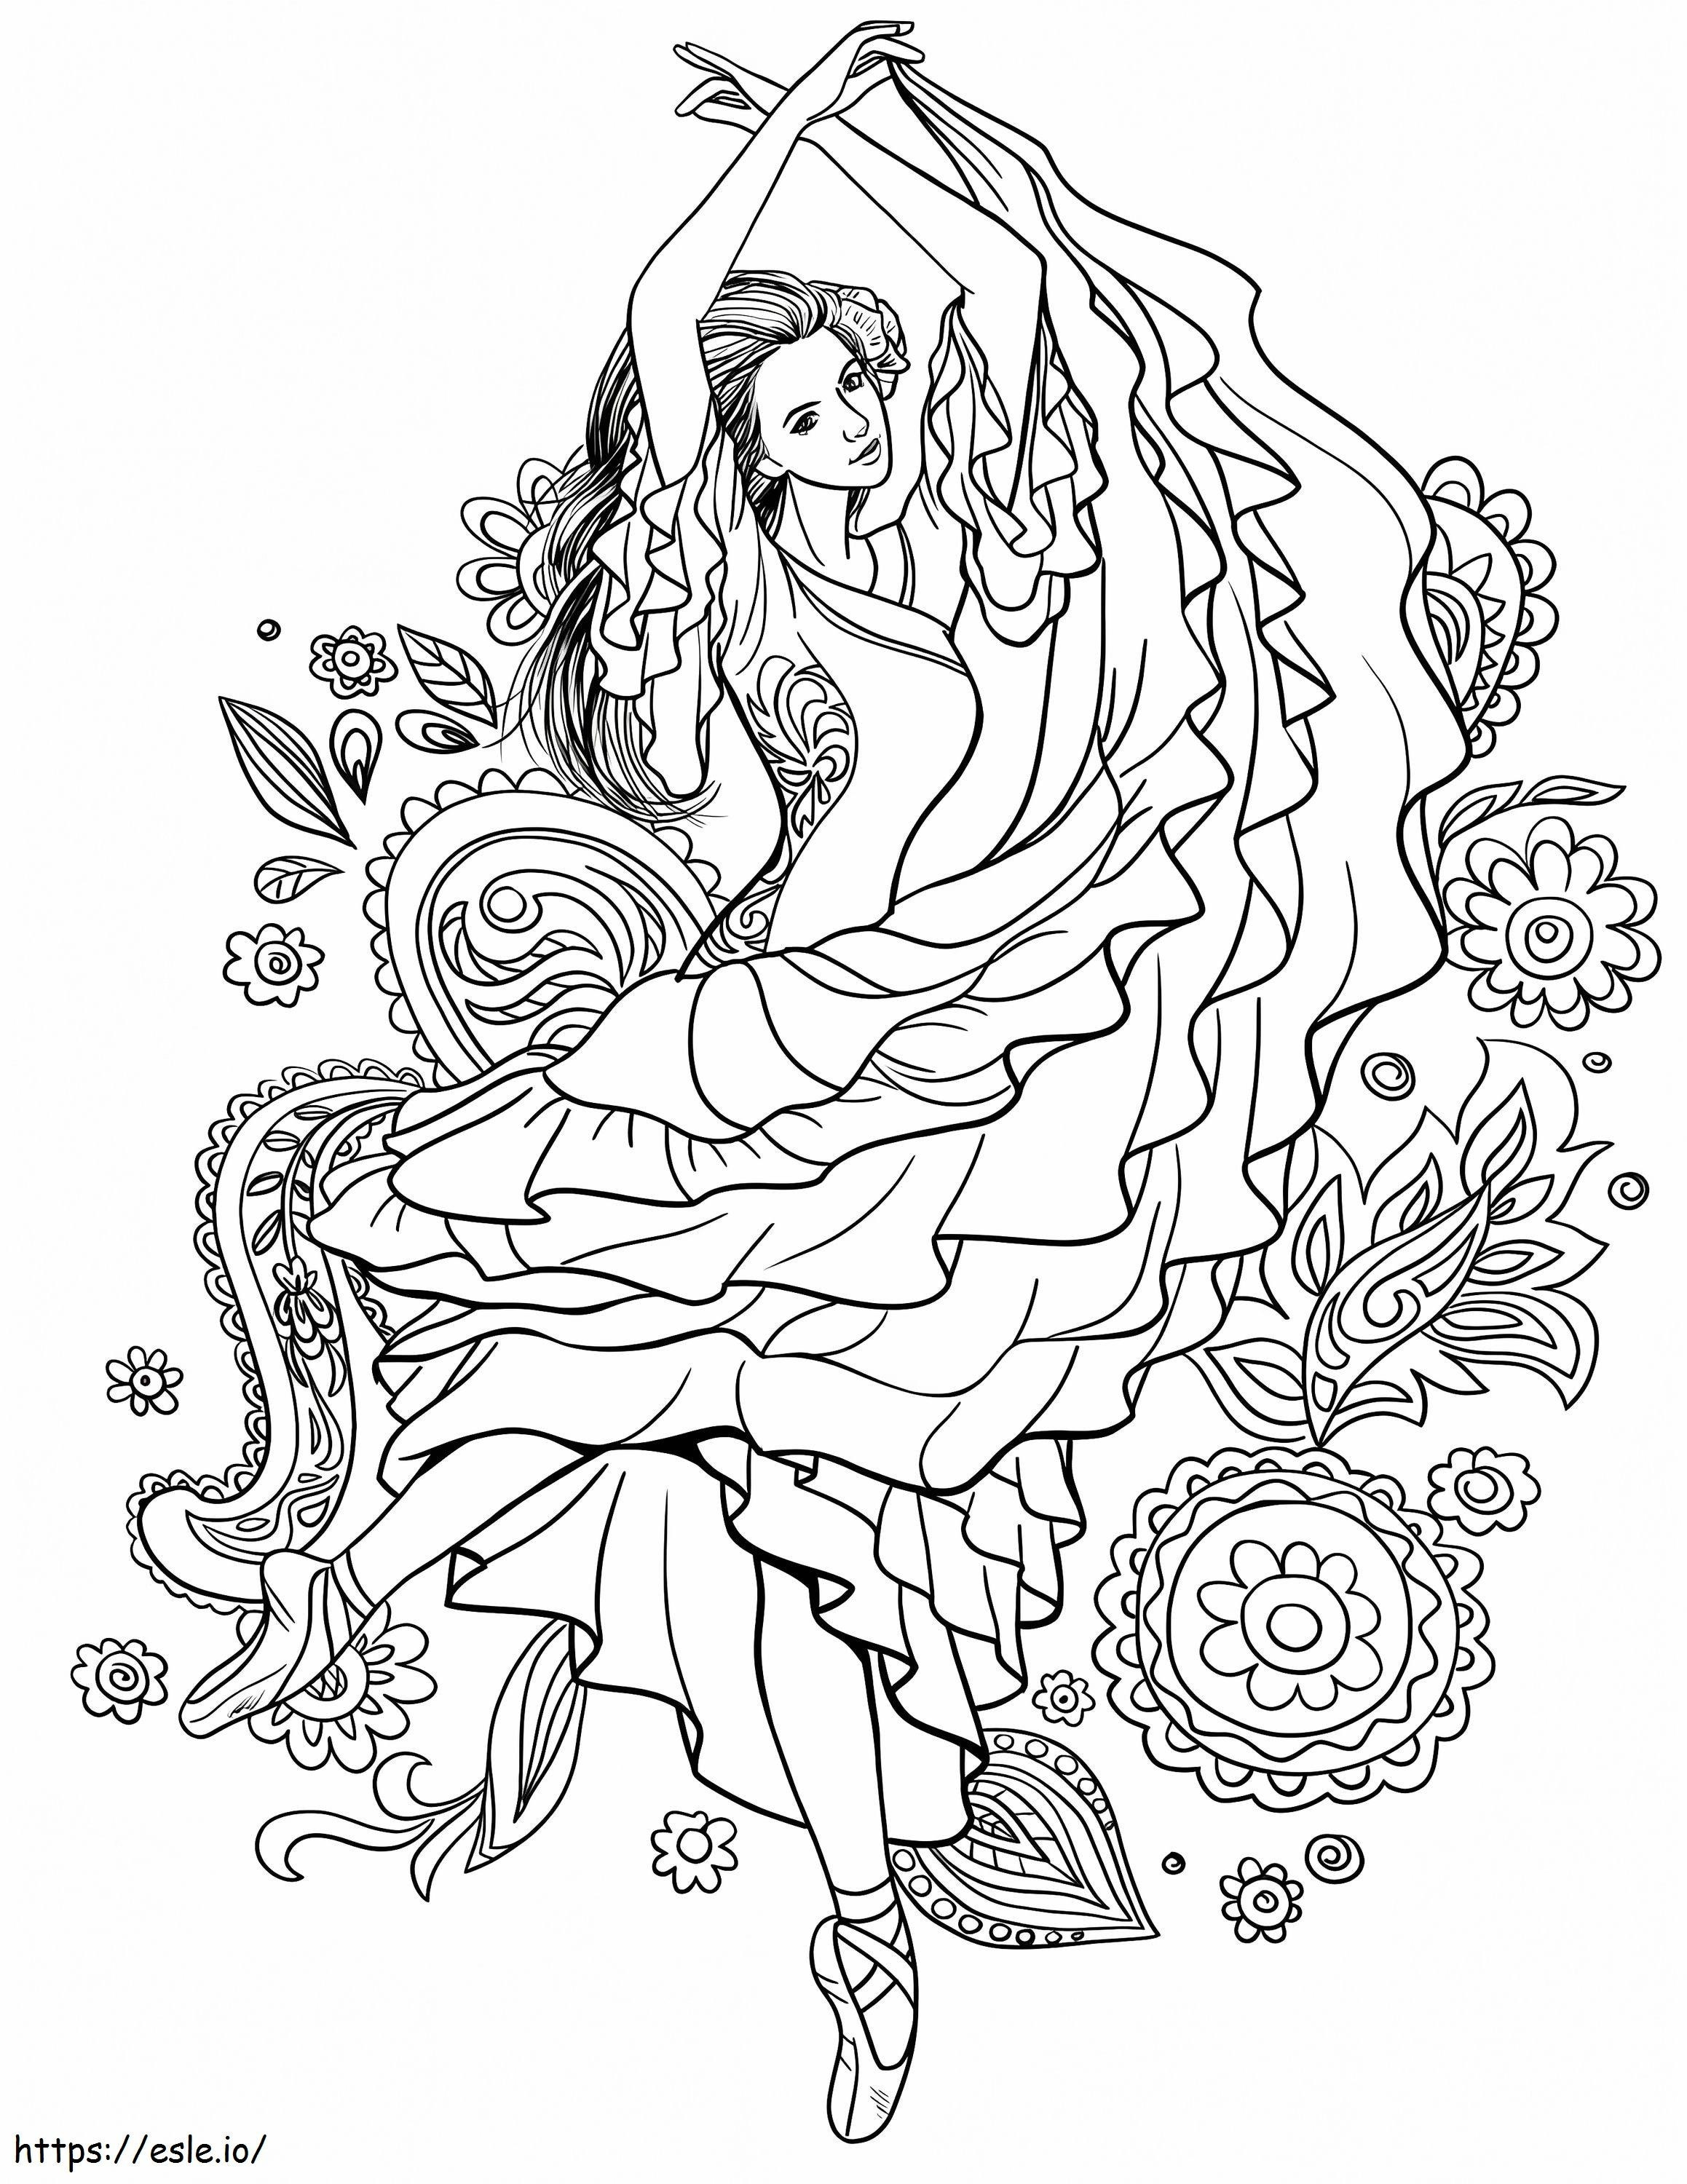 Gypsy Woman Dancing Carmen coloring page